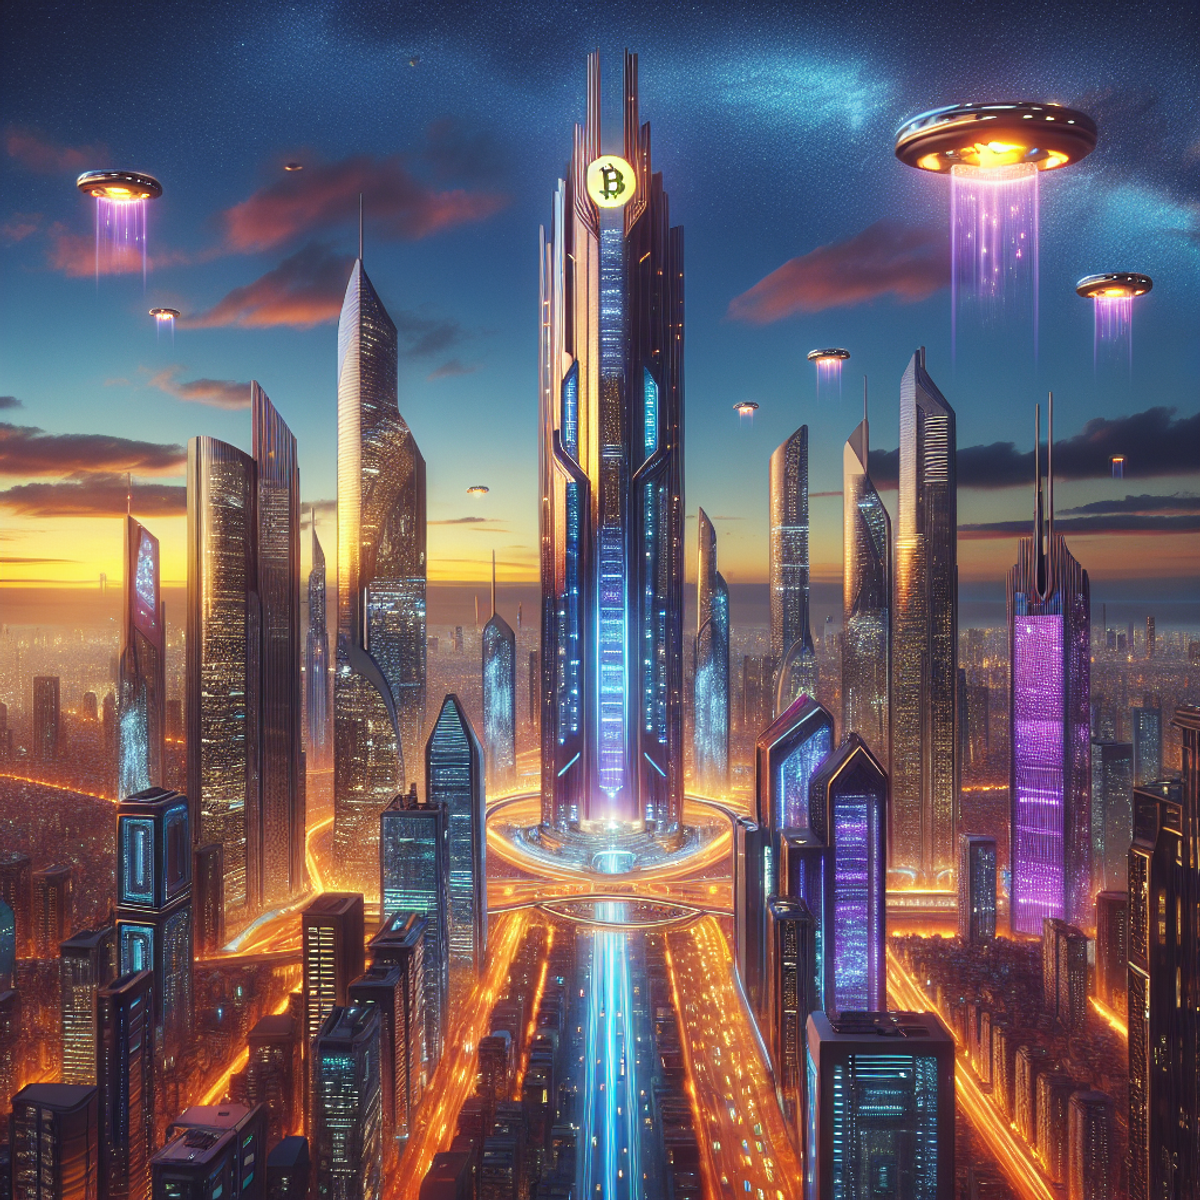 Futuristic cityscape with glowing skyscrapers and Bitcoin symbol.